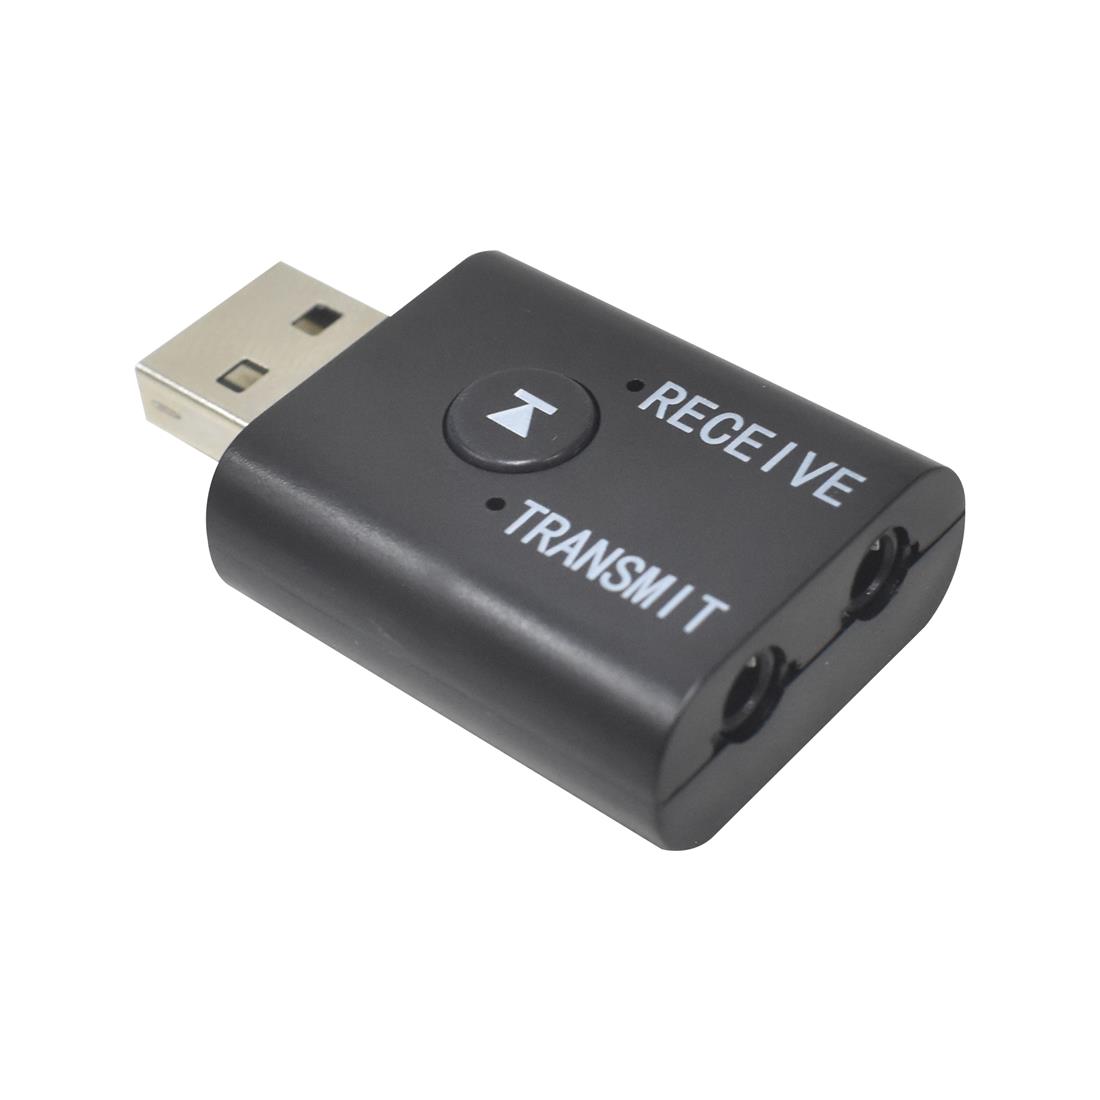 Compre Receptor Transmisor Bluetooth USB Aún Tr6 2 en 1 Adaptador en China